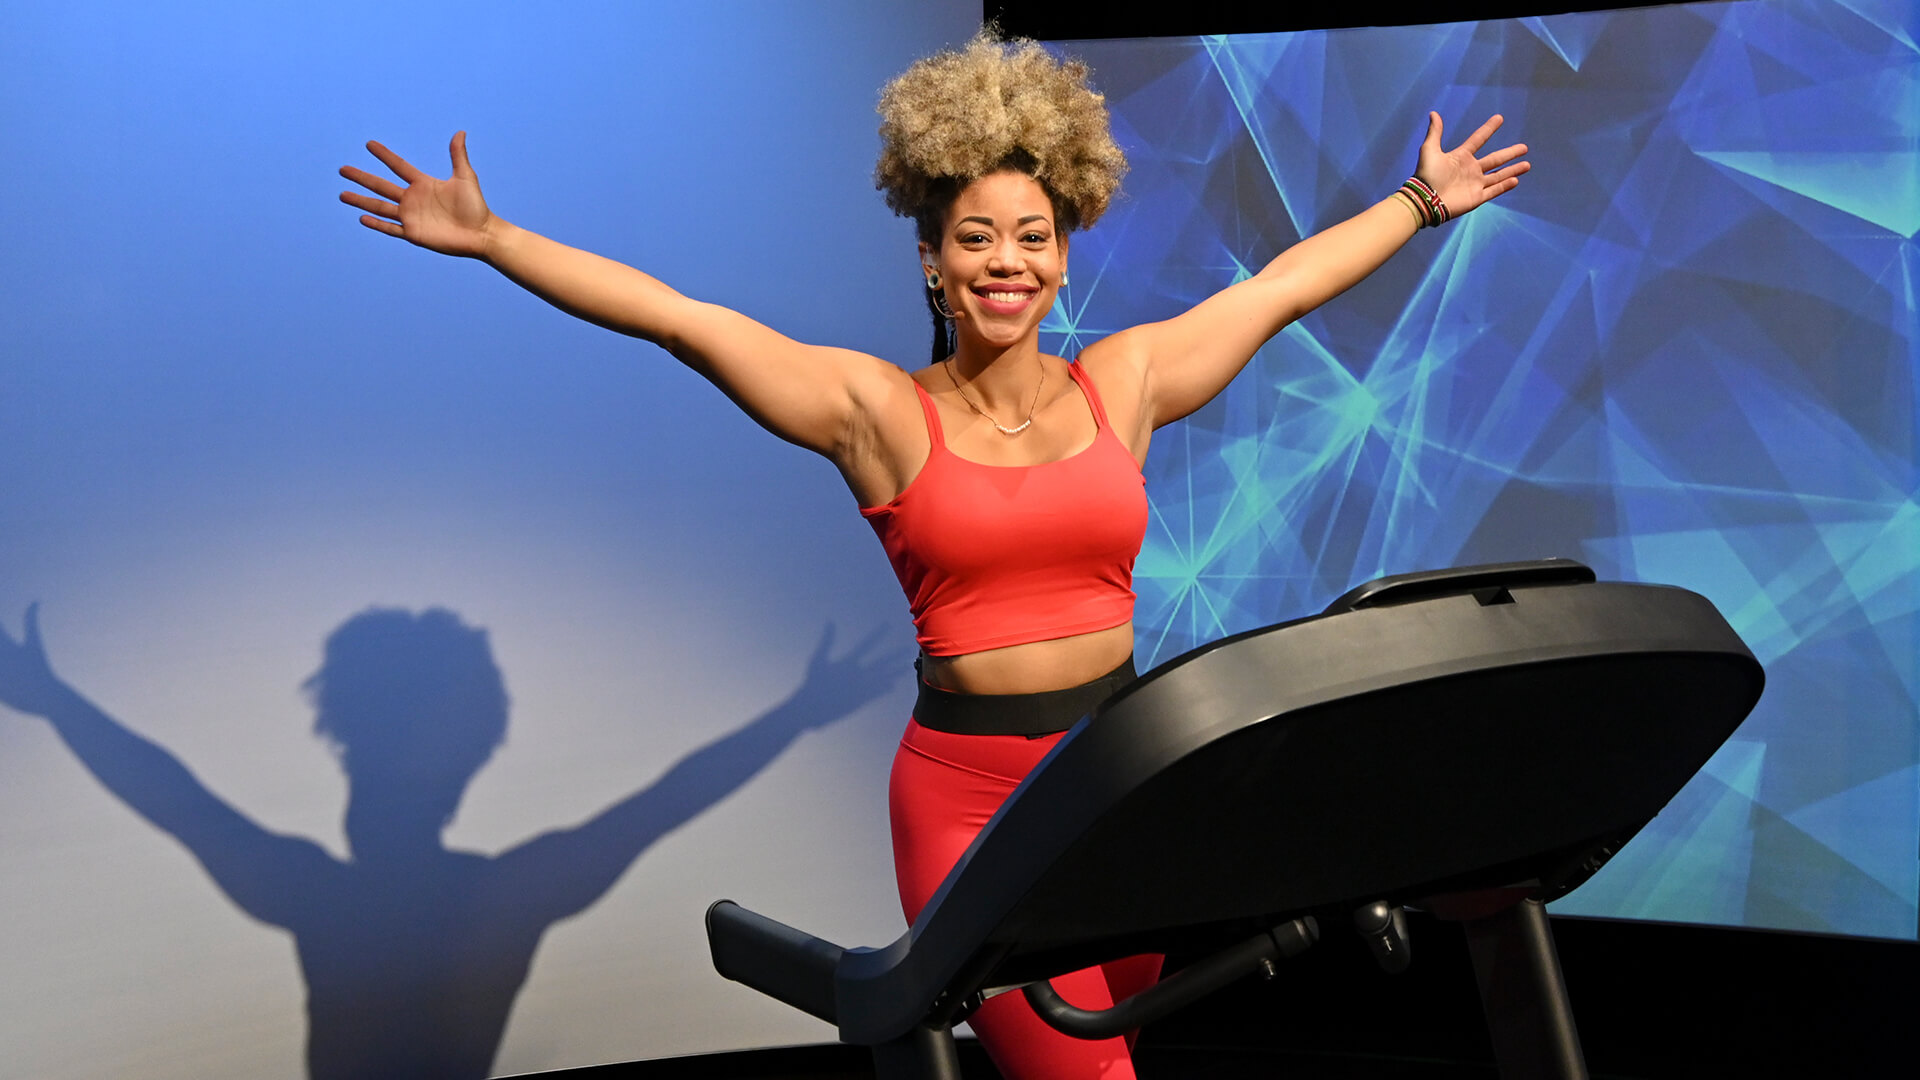 Woman running on Horizon treadmill, celebrating workout